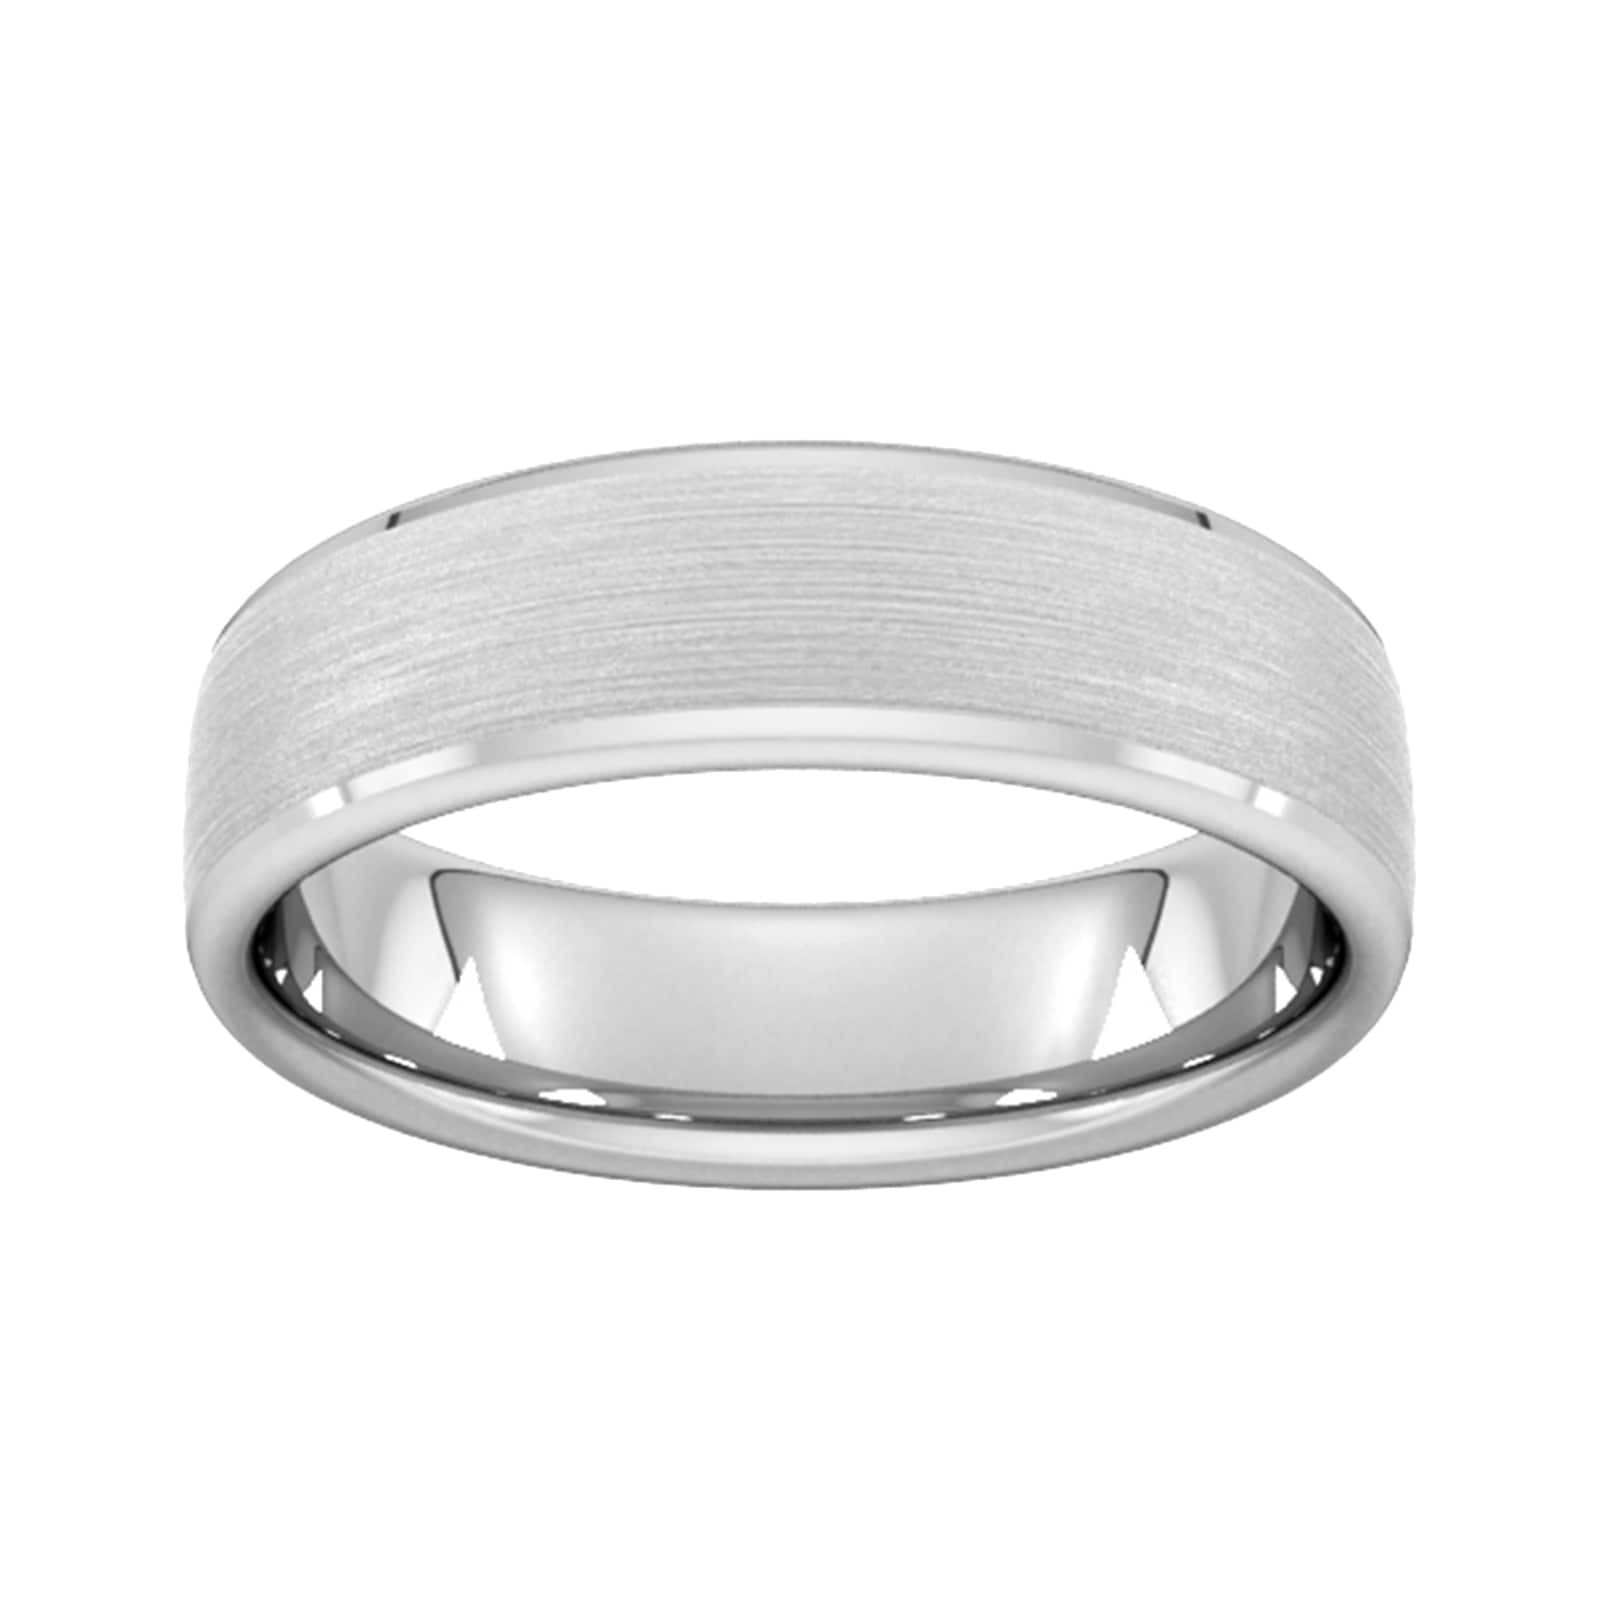 6mm Slight Court Standard Polished Chamfered Edges With Matt Centre Wedding Ring In 950 Palladium - Ring Size M